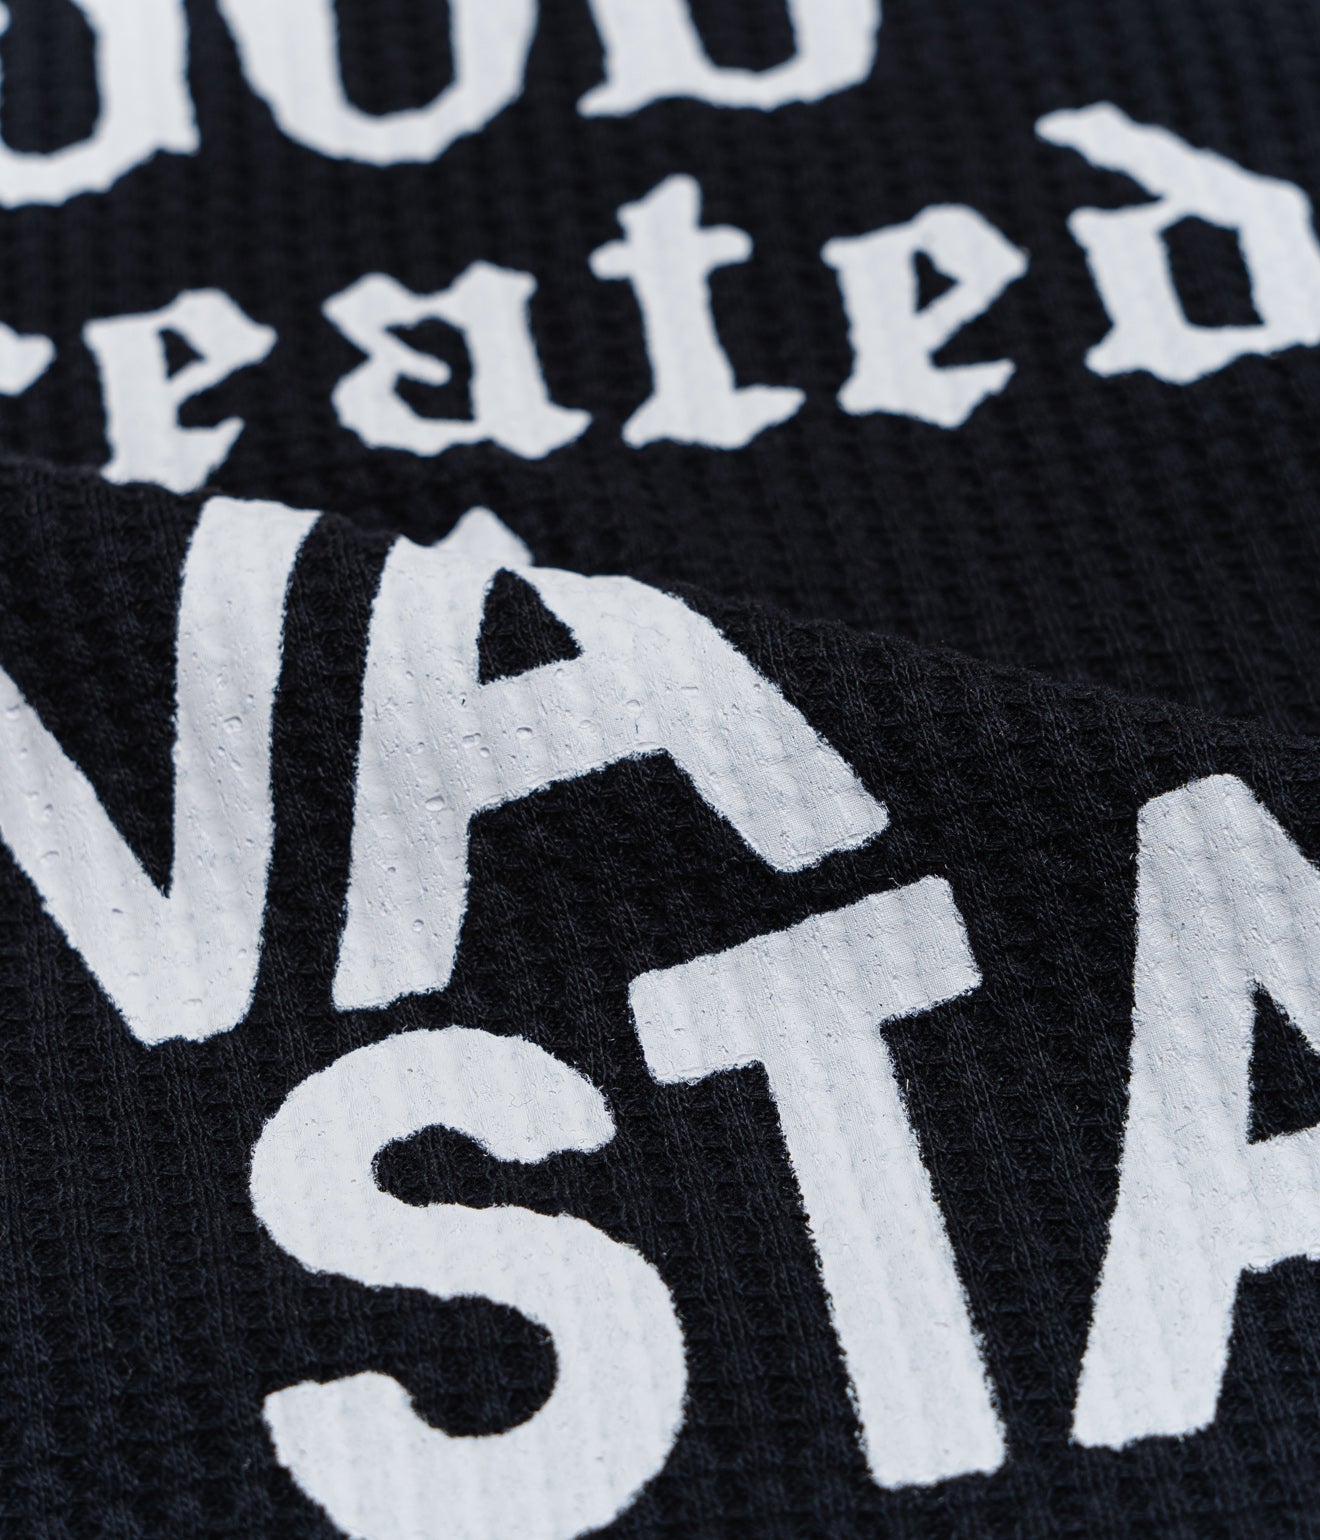 DEVÁ STATES "GENESIS Waffle Knitted Sweater" Black/White - WEAREALLANIMALS